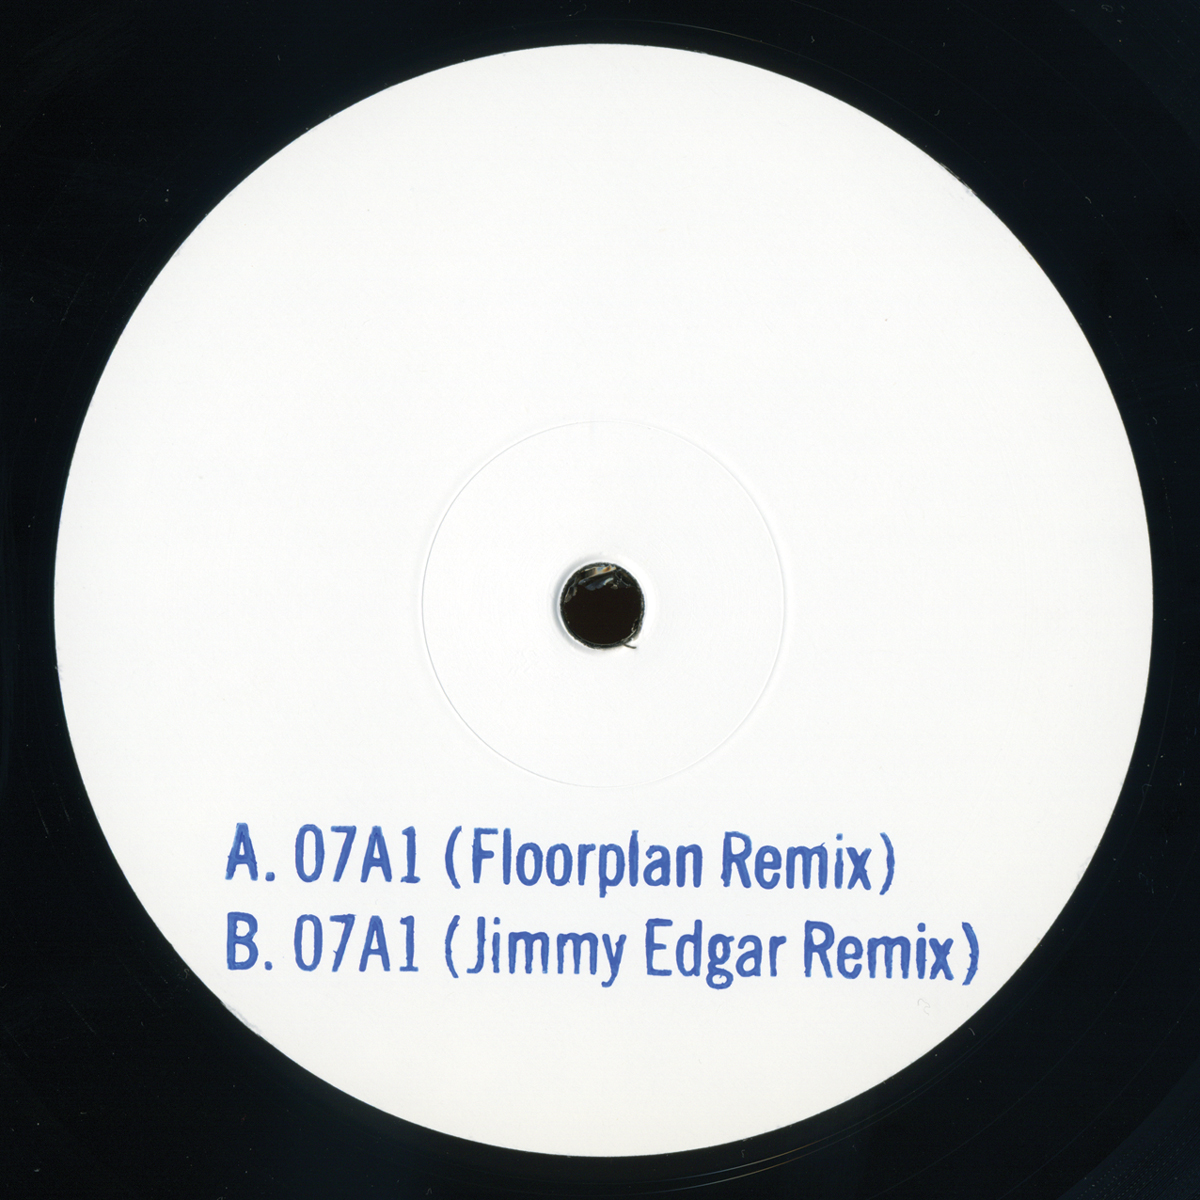 Image 07a1 ItaloJohnson - 07a1 (Floorplan & Jimmy Edgar Remixes) / ItaloJohnson